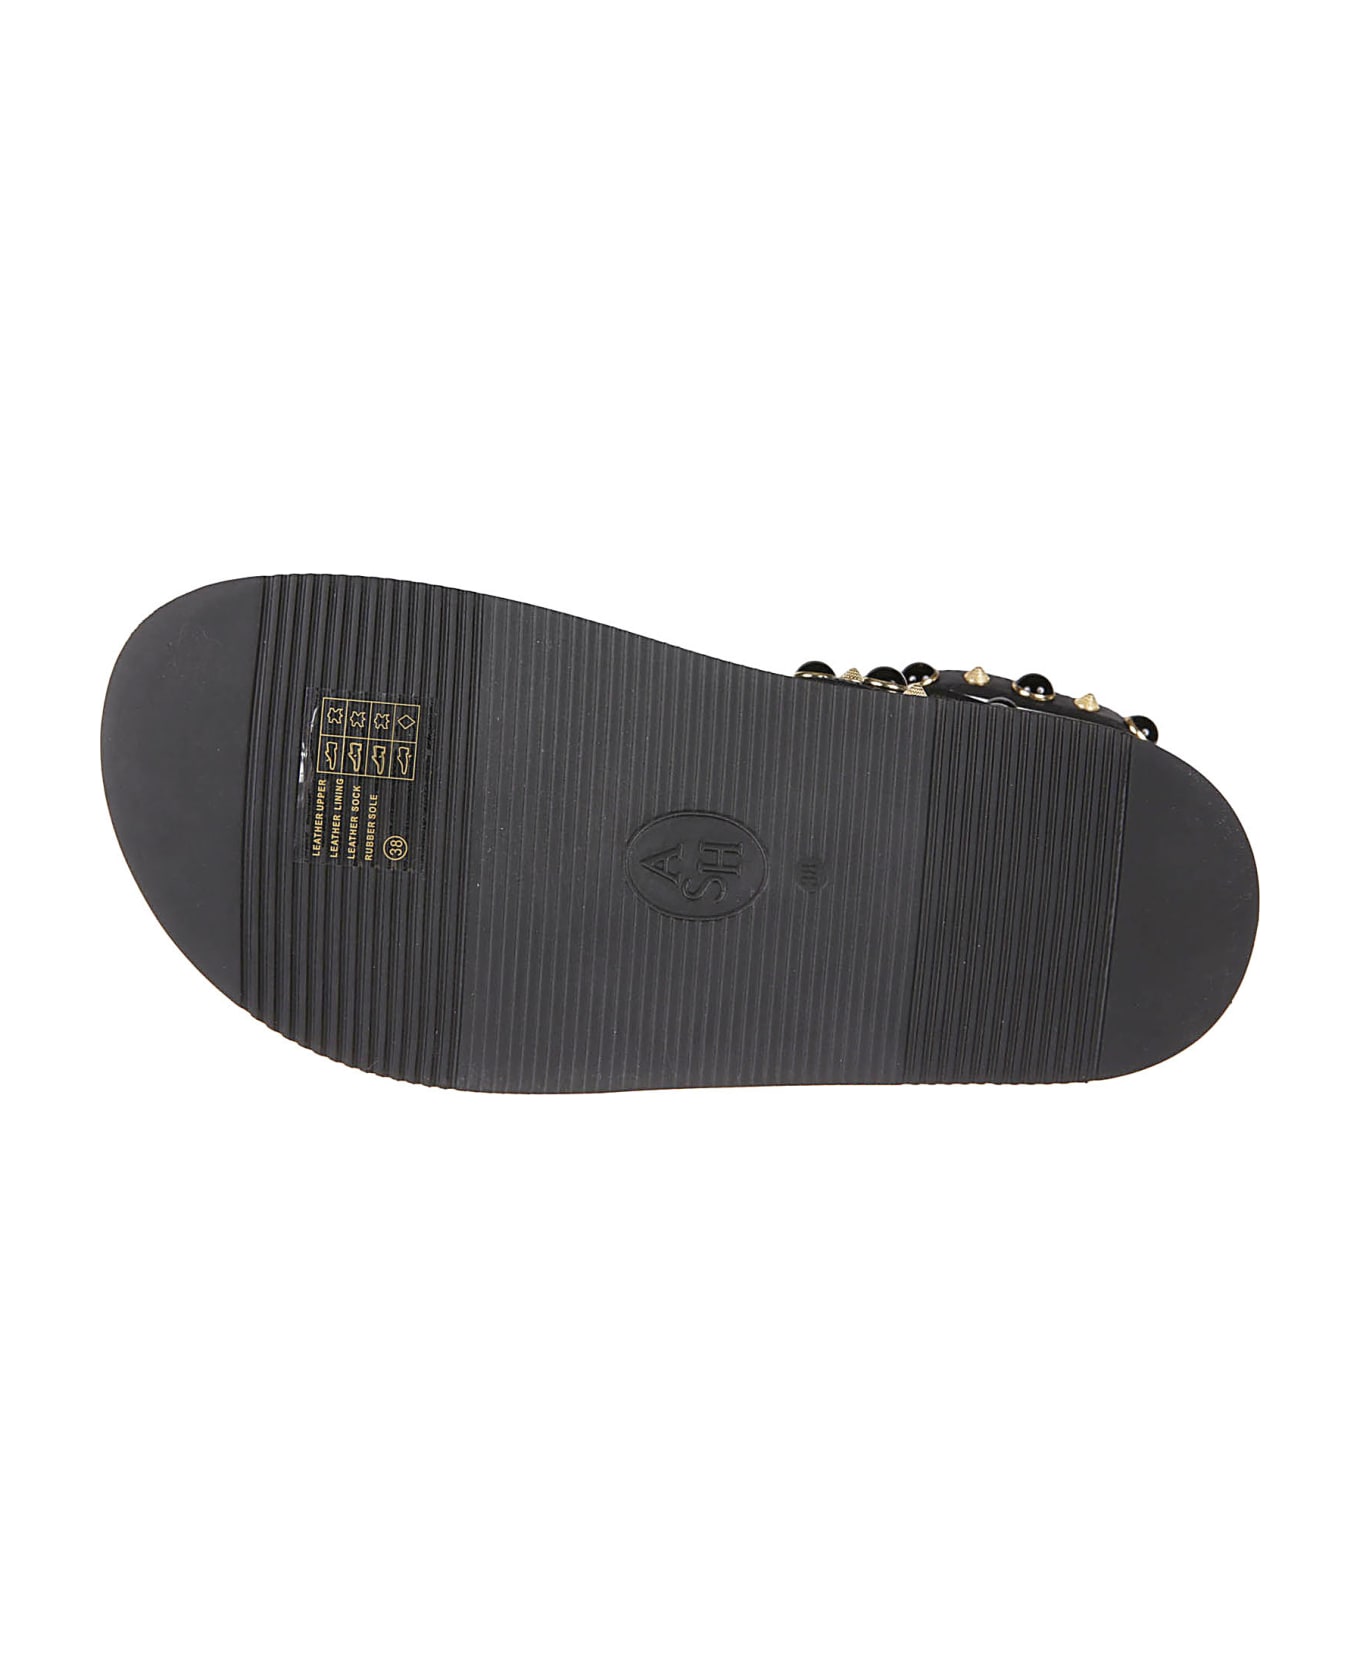 Ash Upup Sandals - Black/gold サンダル